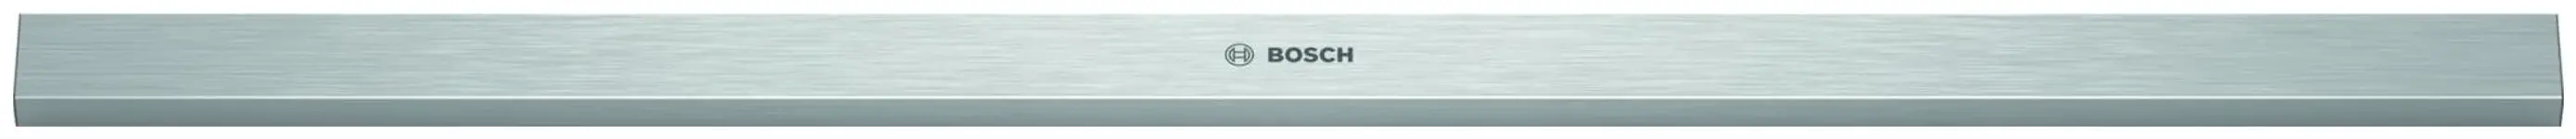 BOSCH-DSZ4985-Afzuigkap accessoires